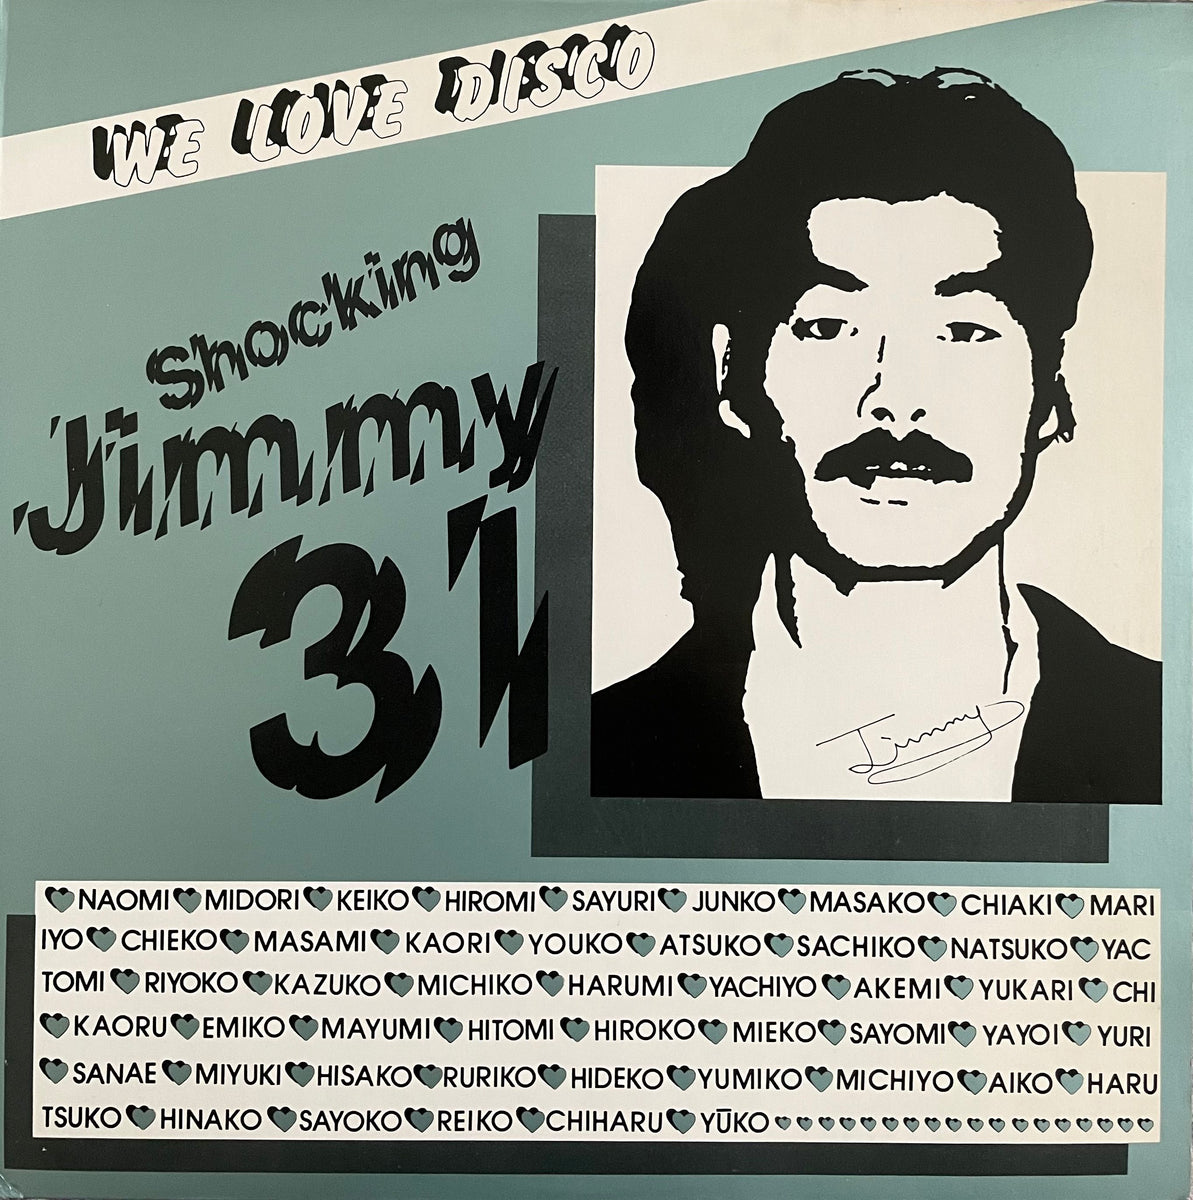 Shocking Jimmy 31 – We Love Disco – Galapagos Records